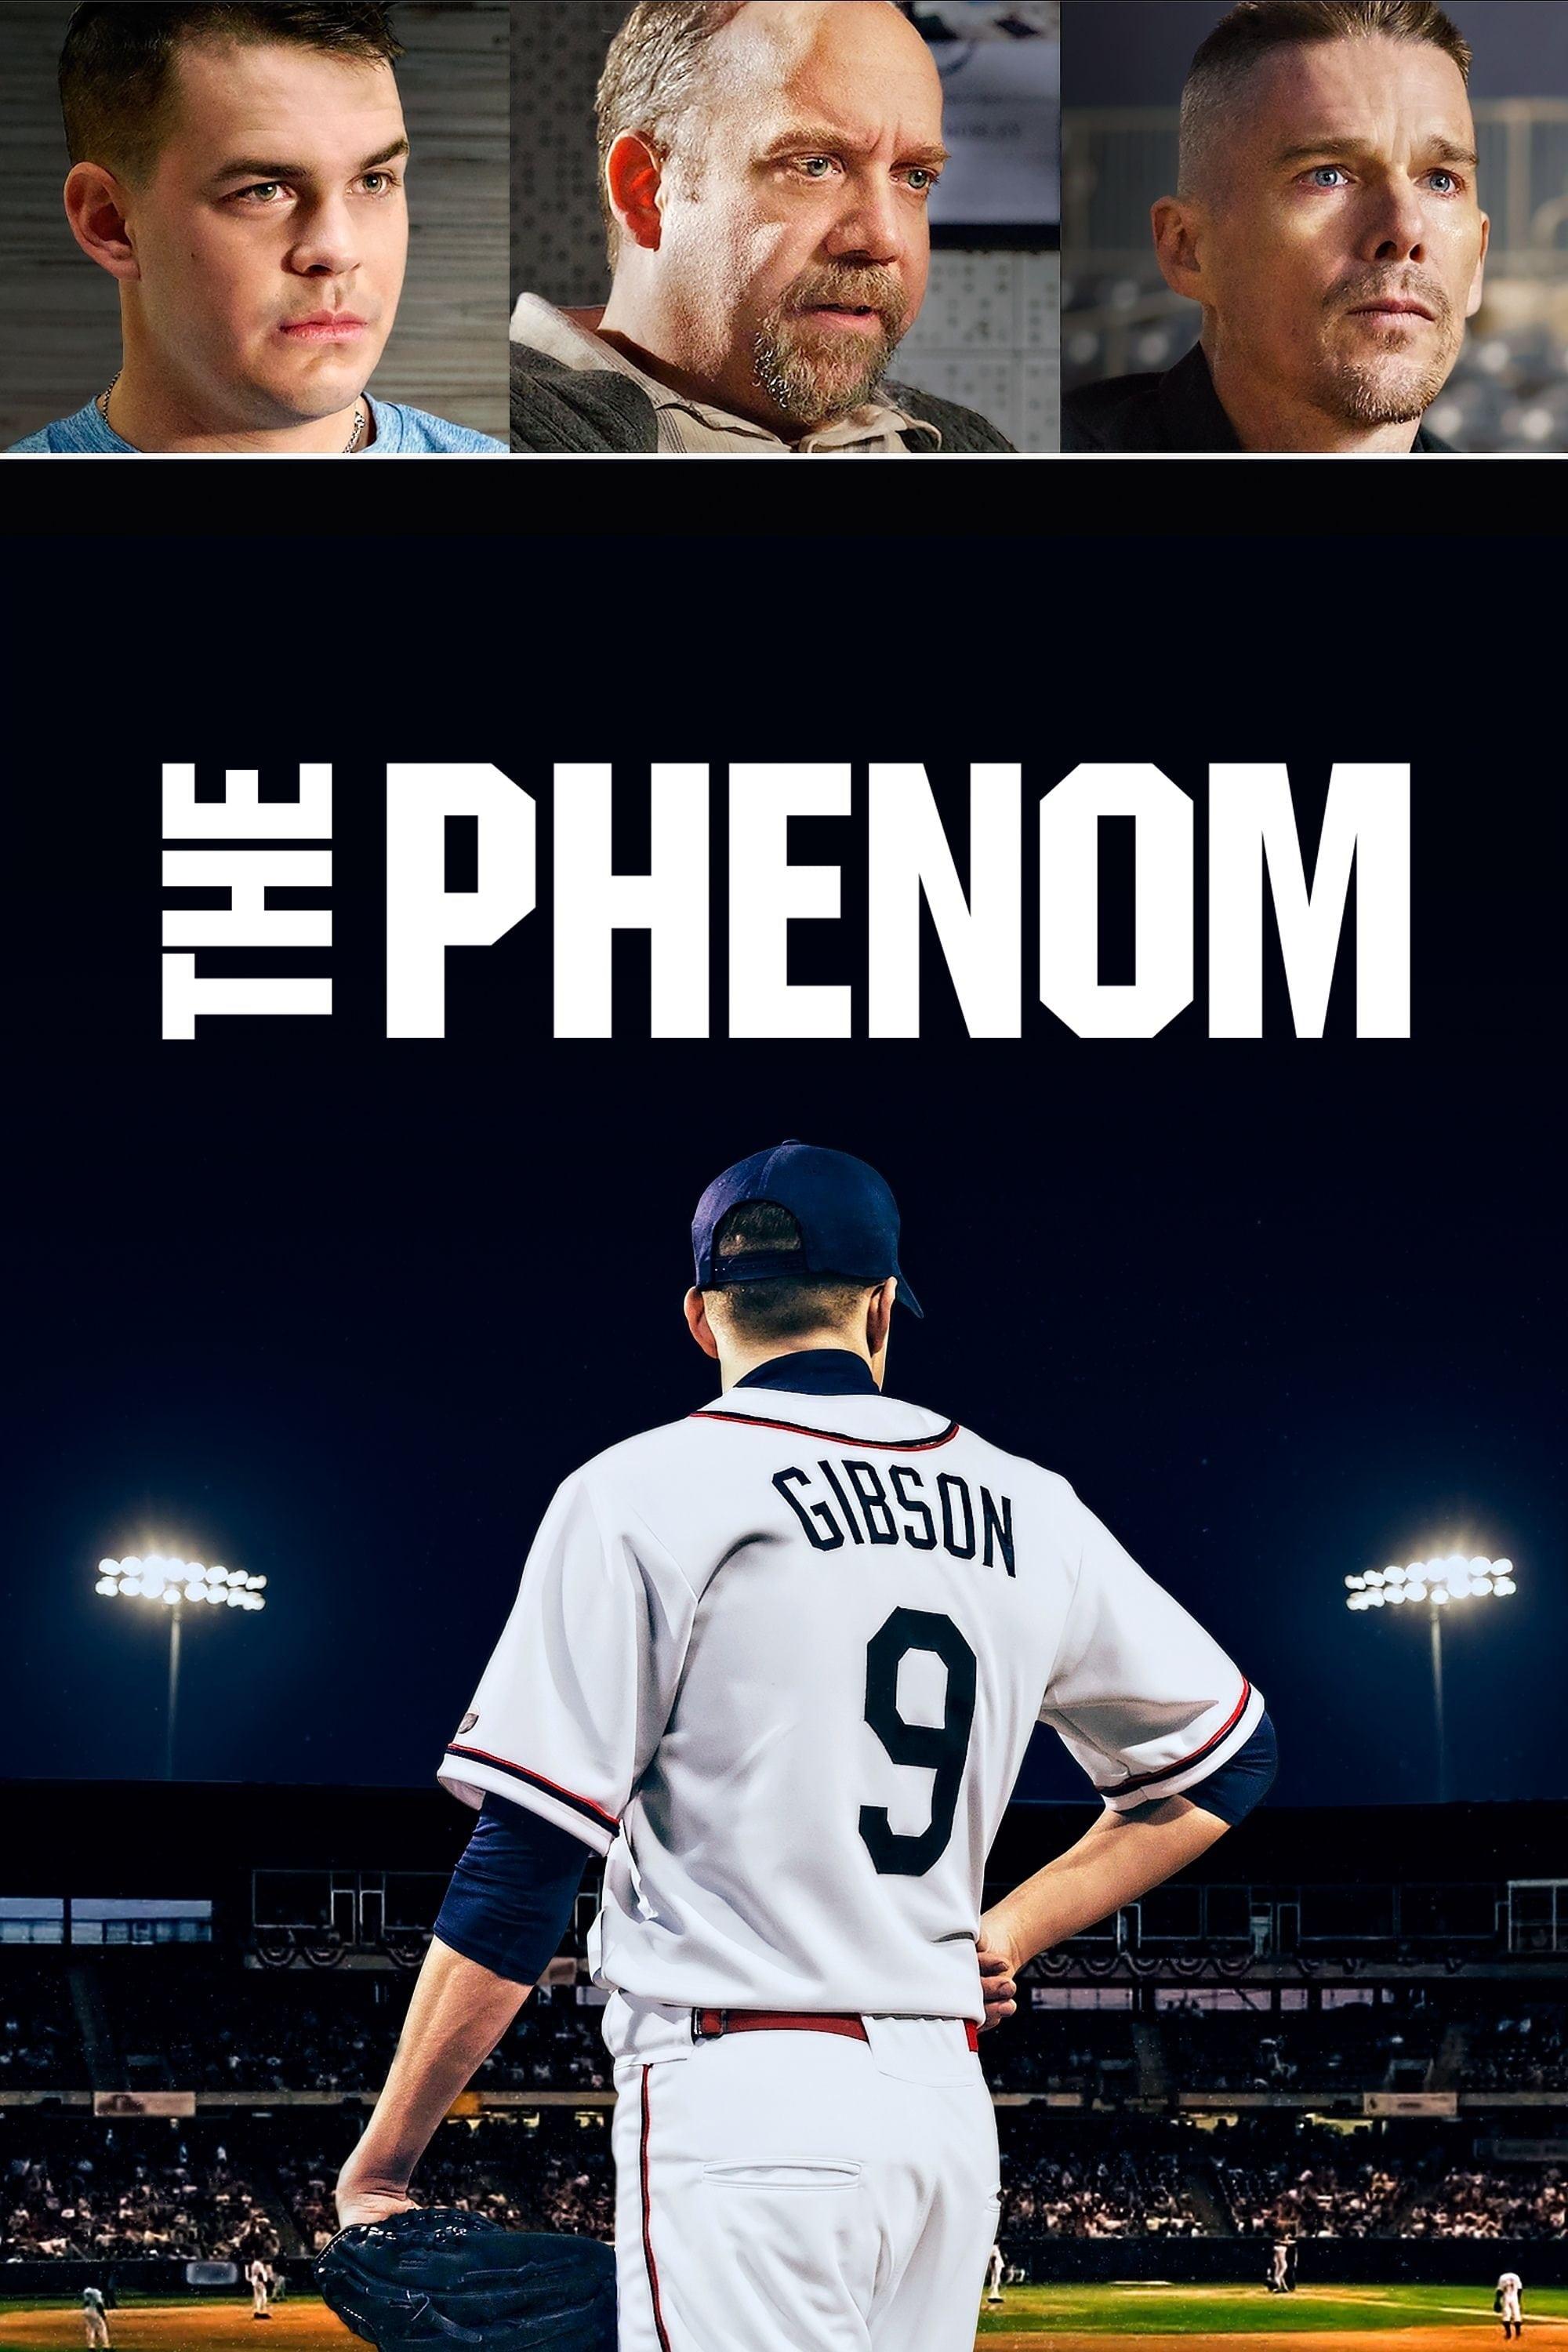 The Phenom poster